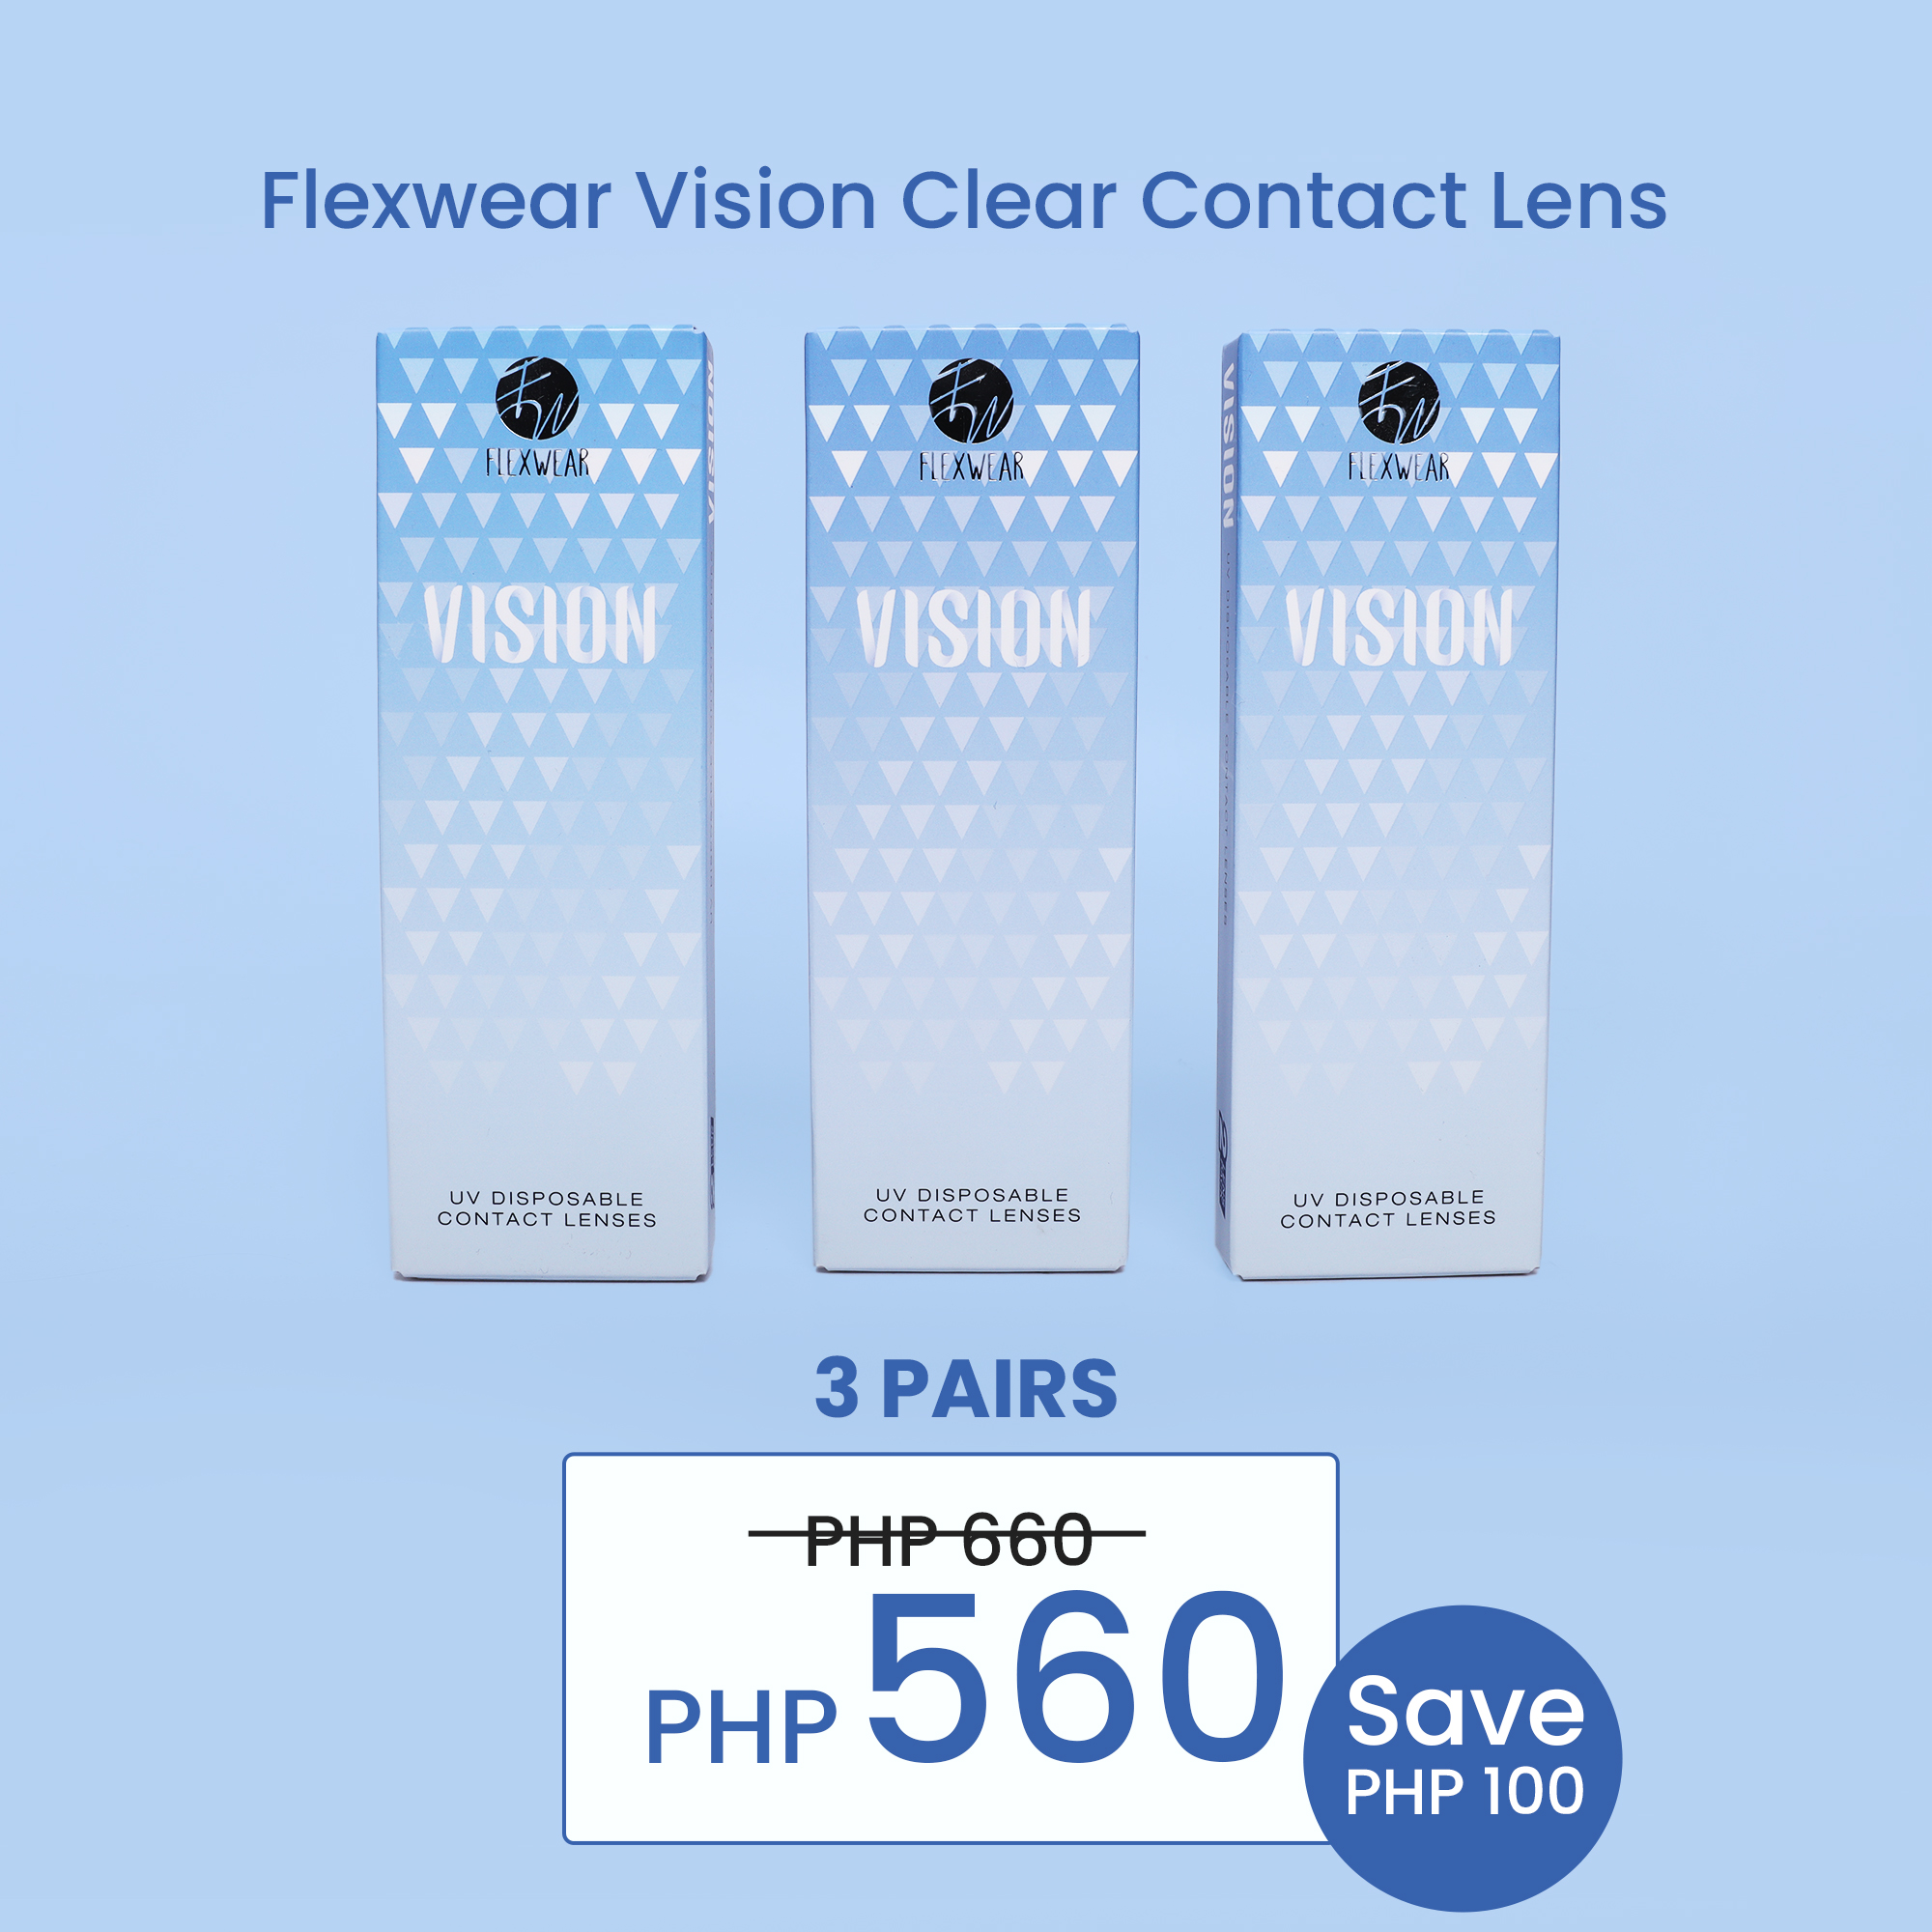 A Flexwear Vision clear contact lens in a box